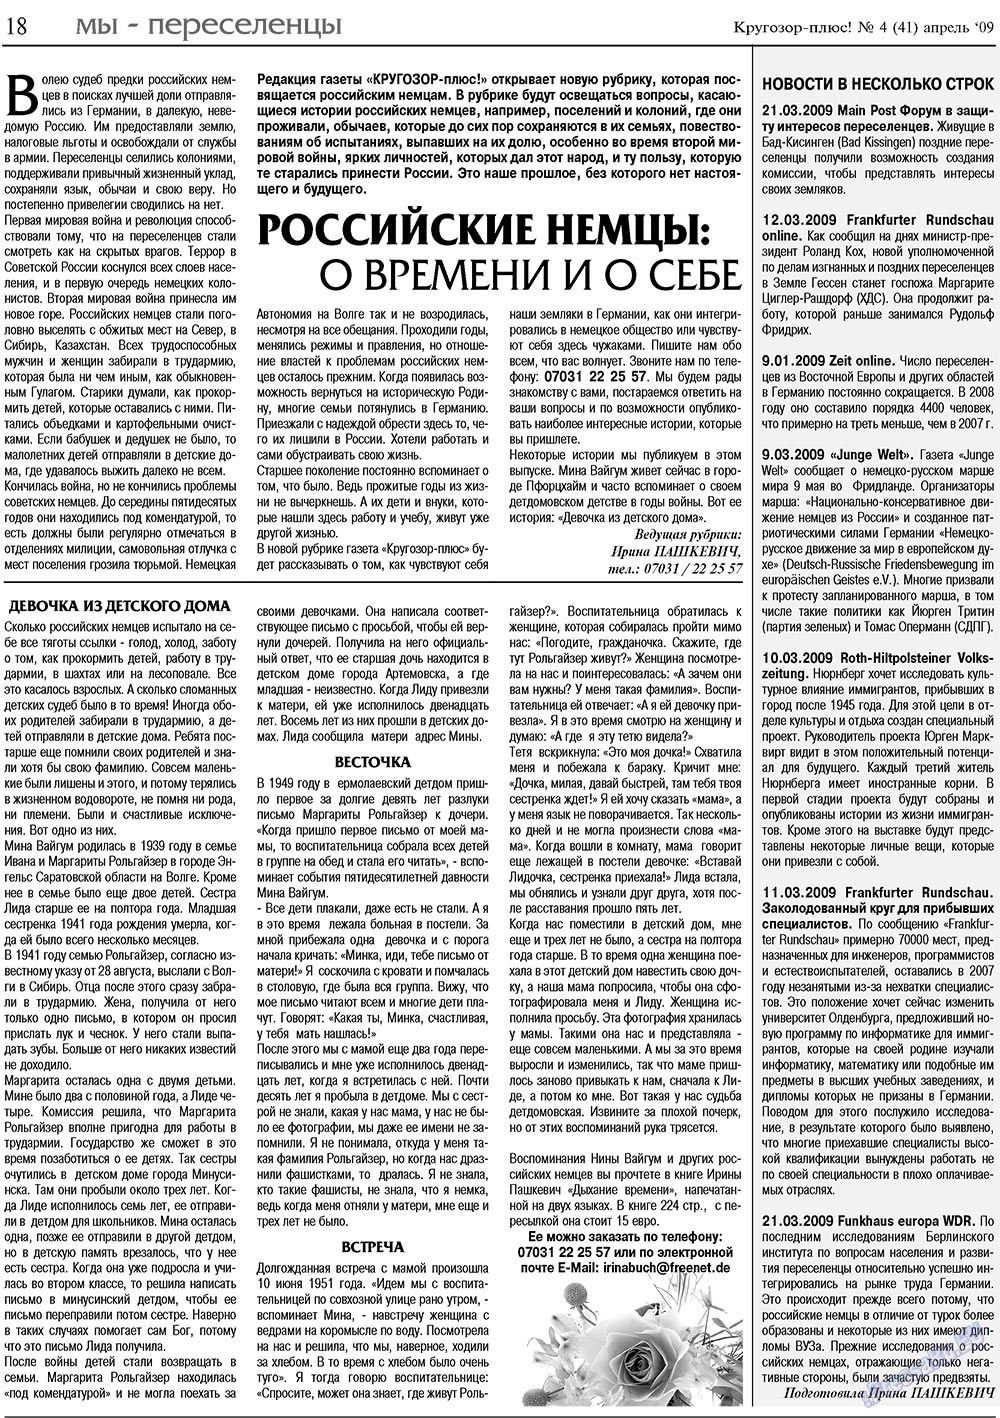 Кругозор плюс! (газета). 2009 год, номер 4, стр. 18